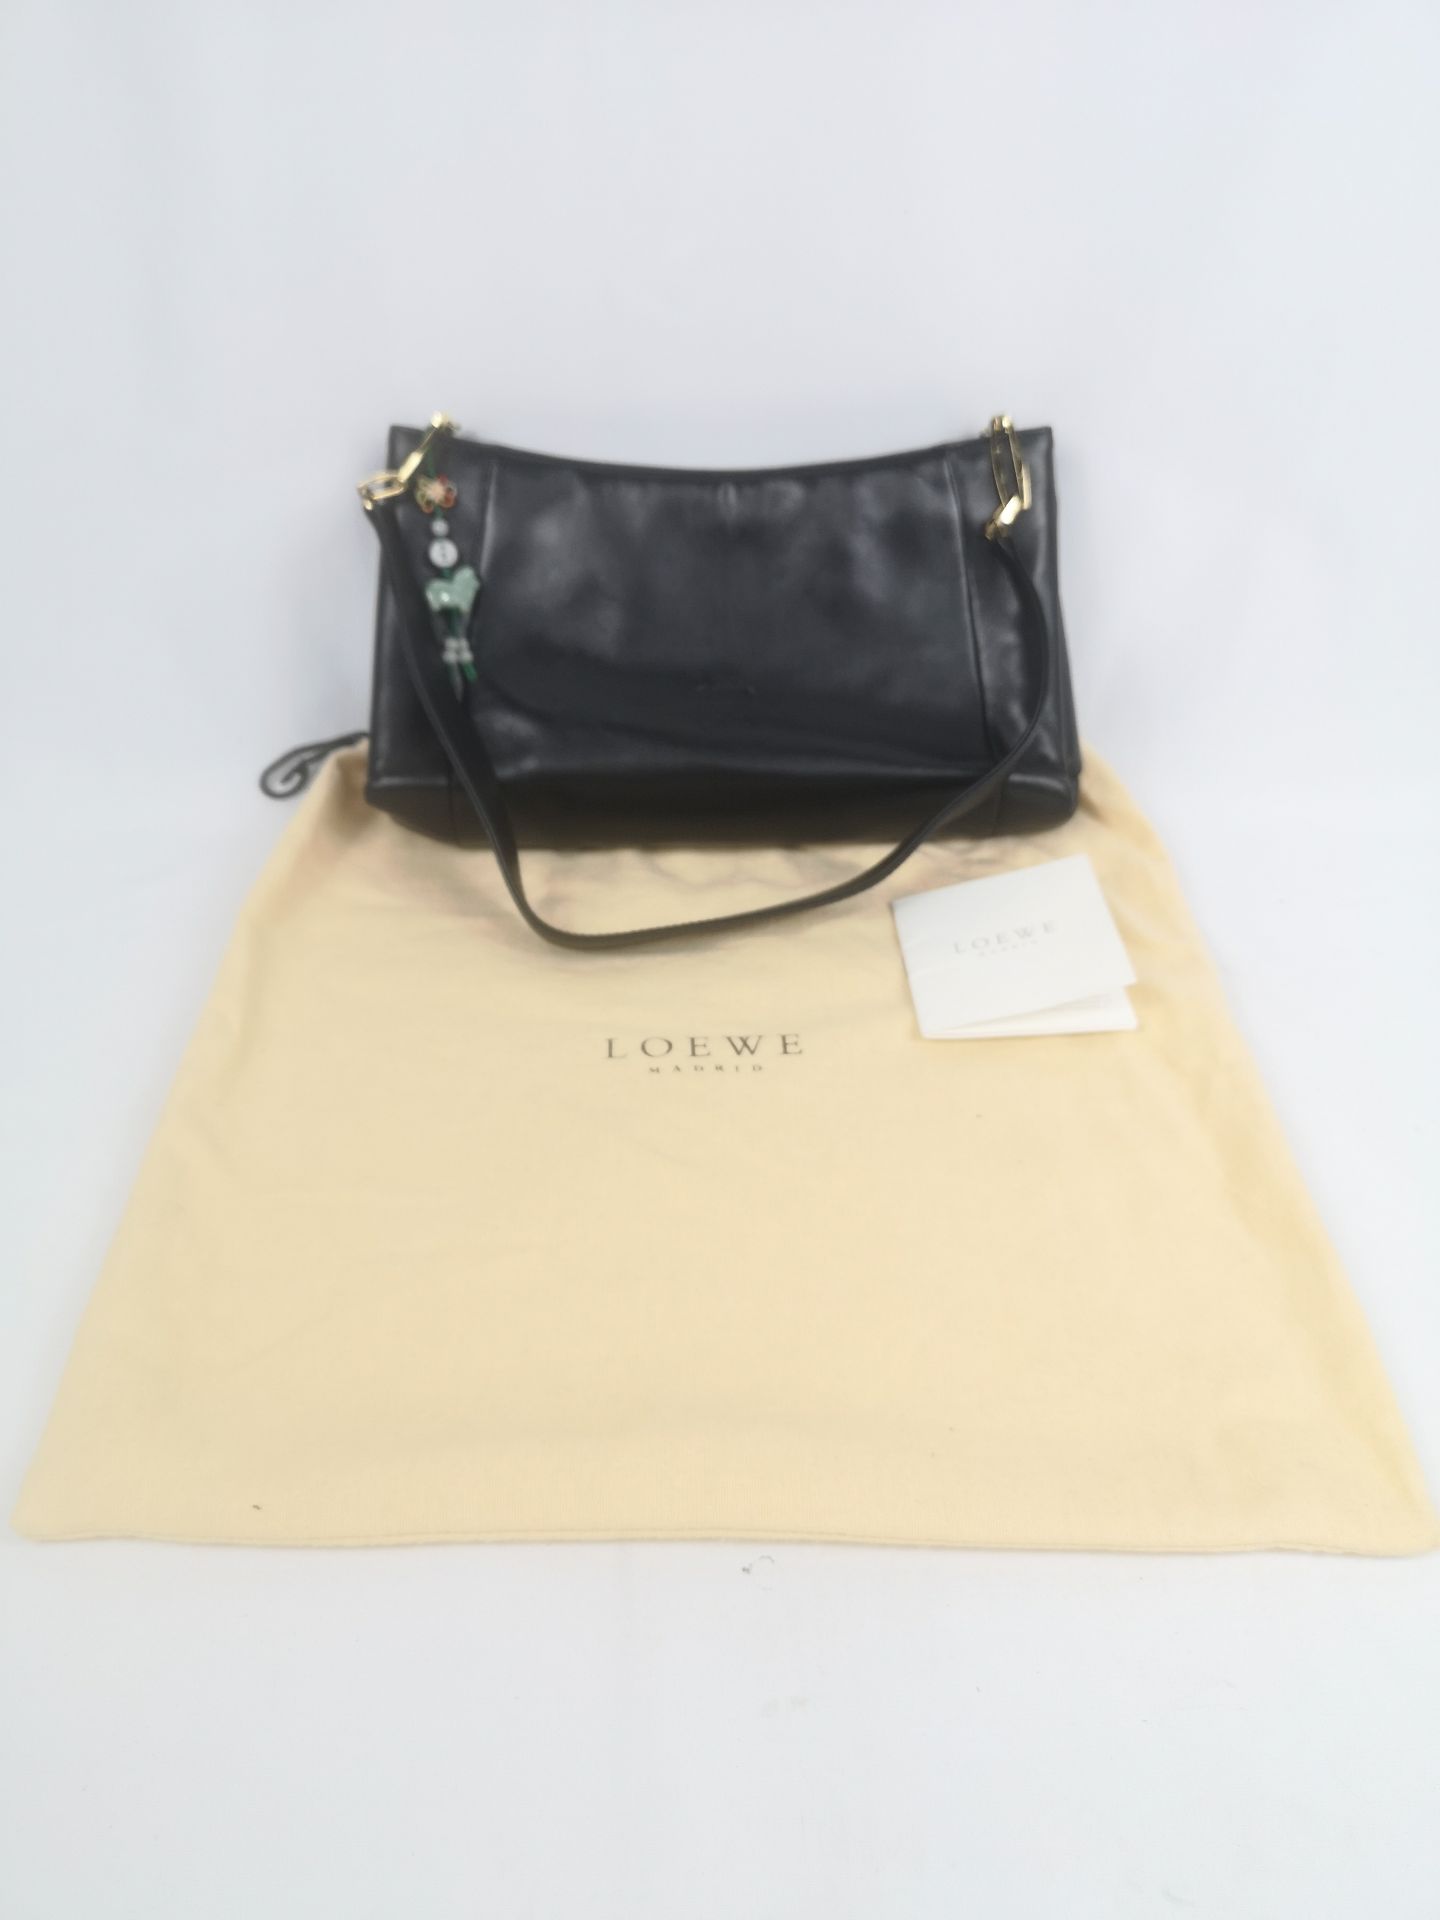 Loewe black leather handbag - Image 2 of 5